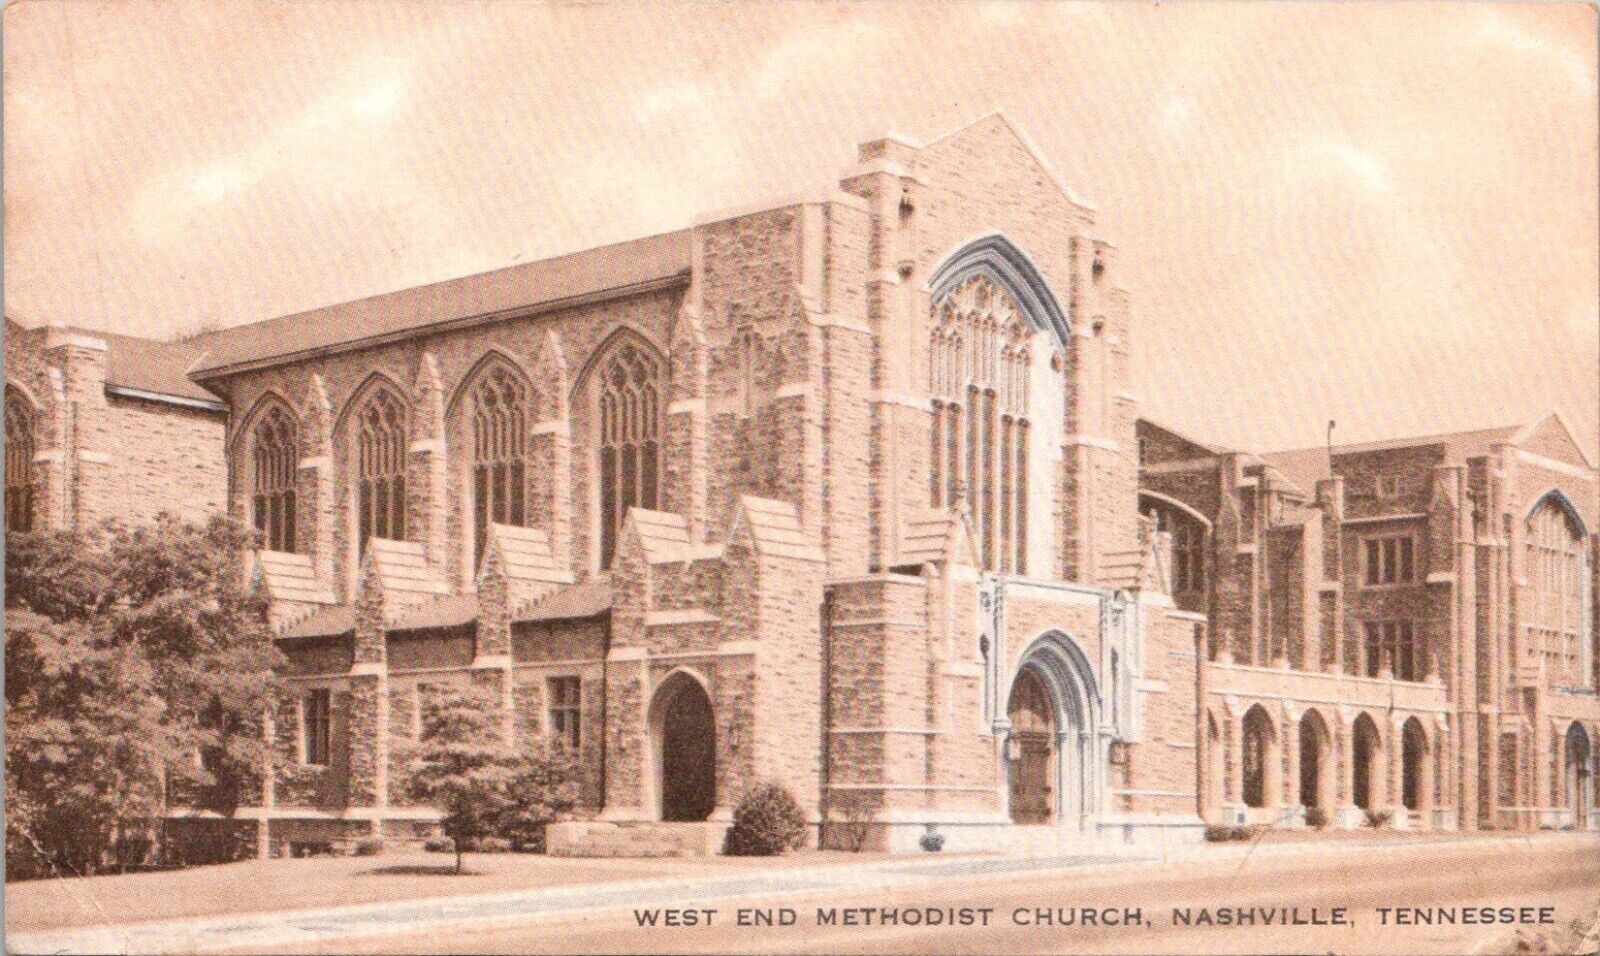 Nashville, TN West End Methodist Church Postcard c. 1950s